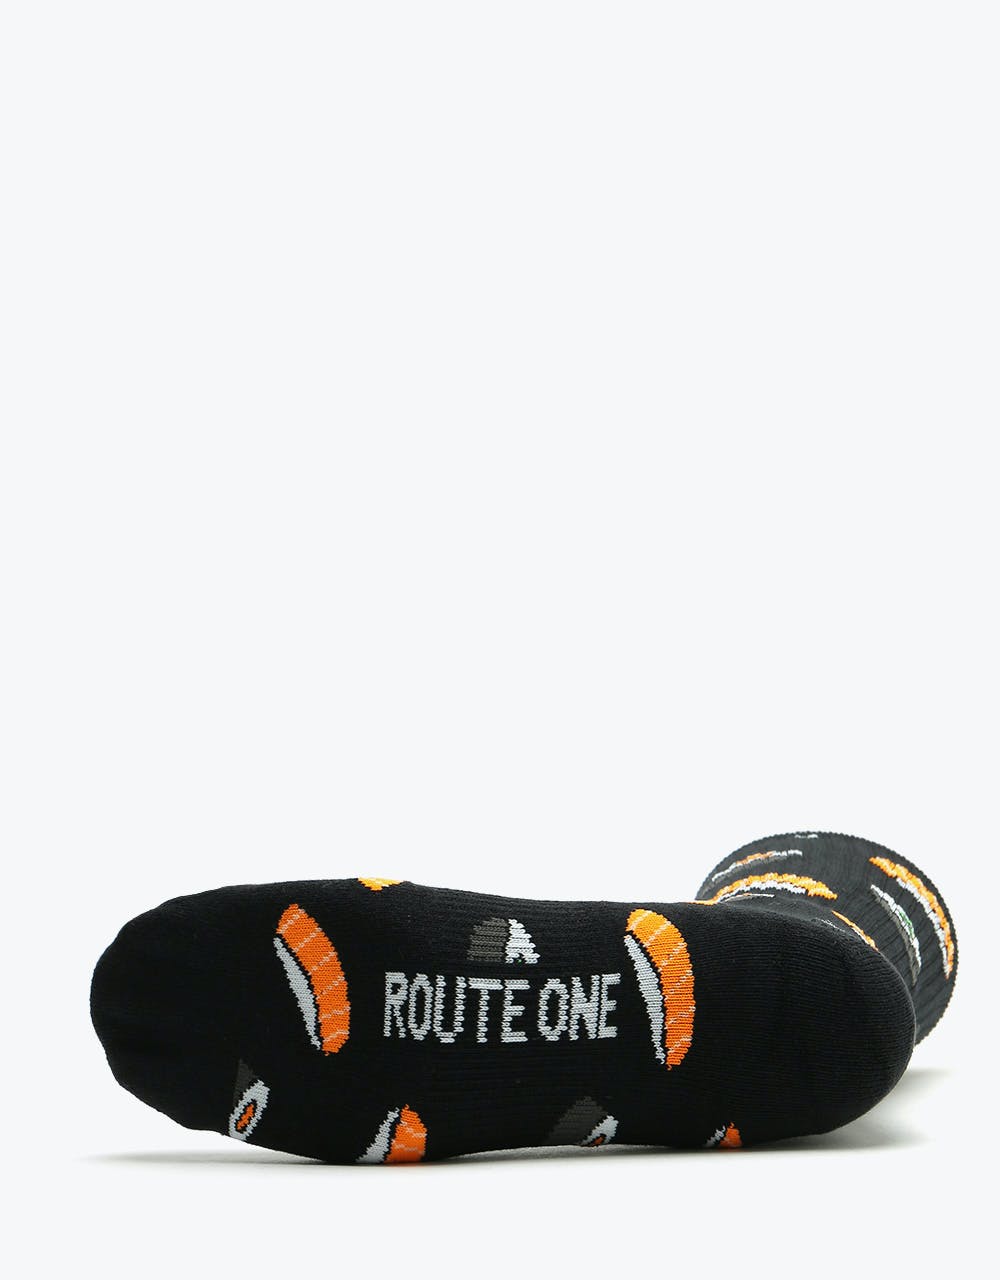 Route One Sushi Socks - Black